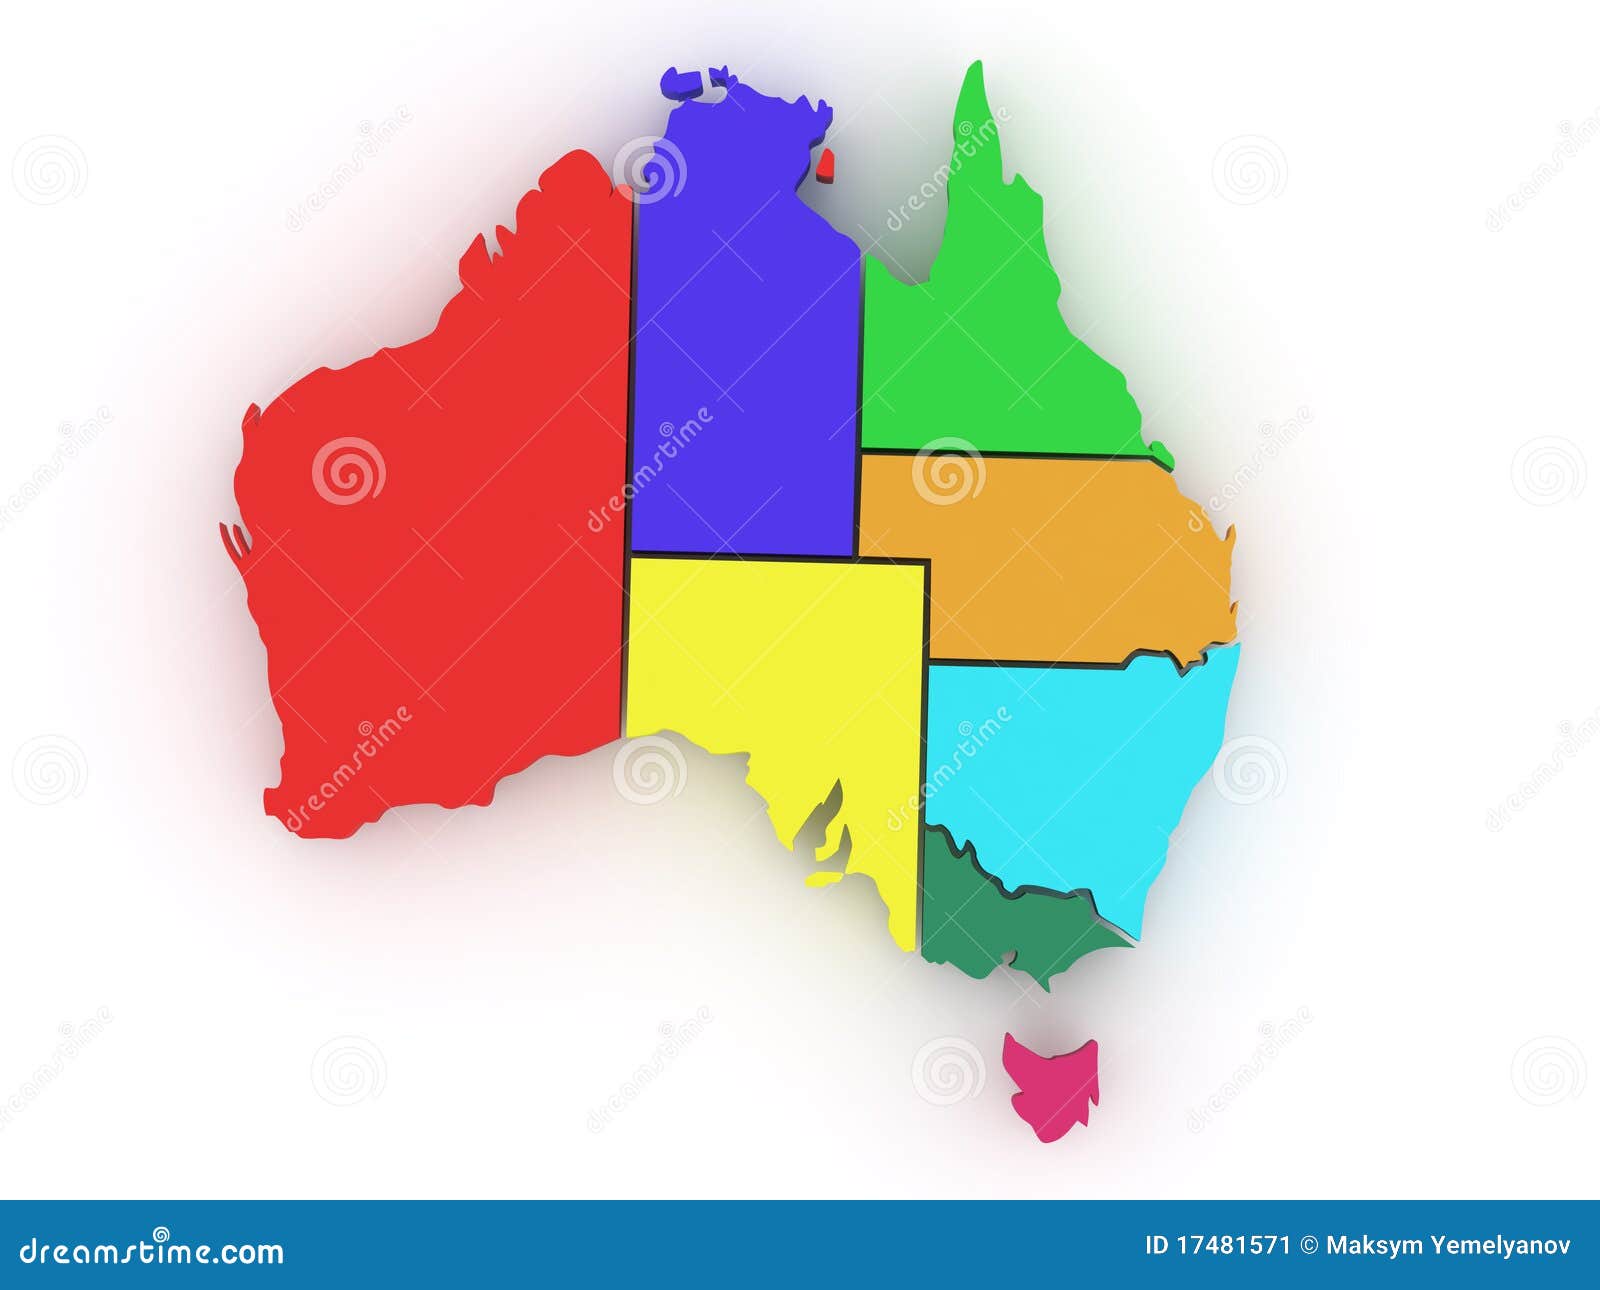 three-dimensional map of australia